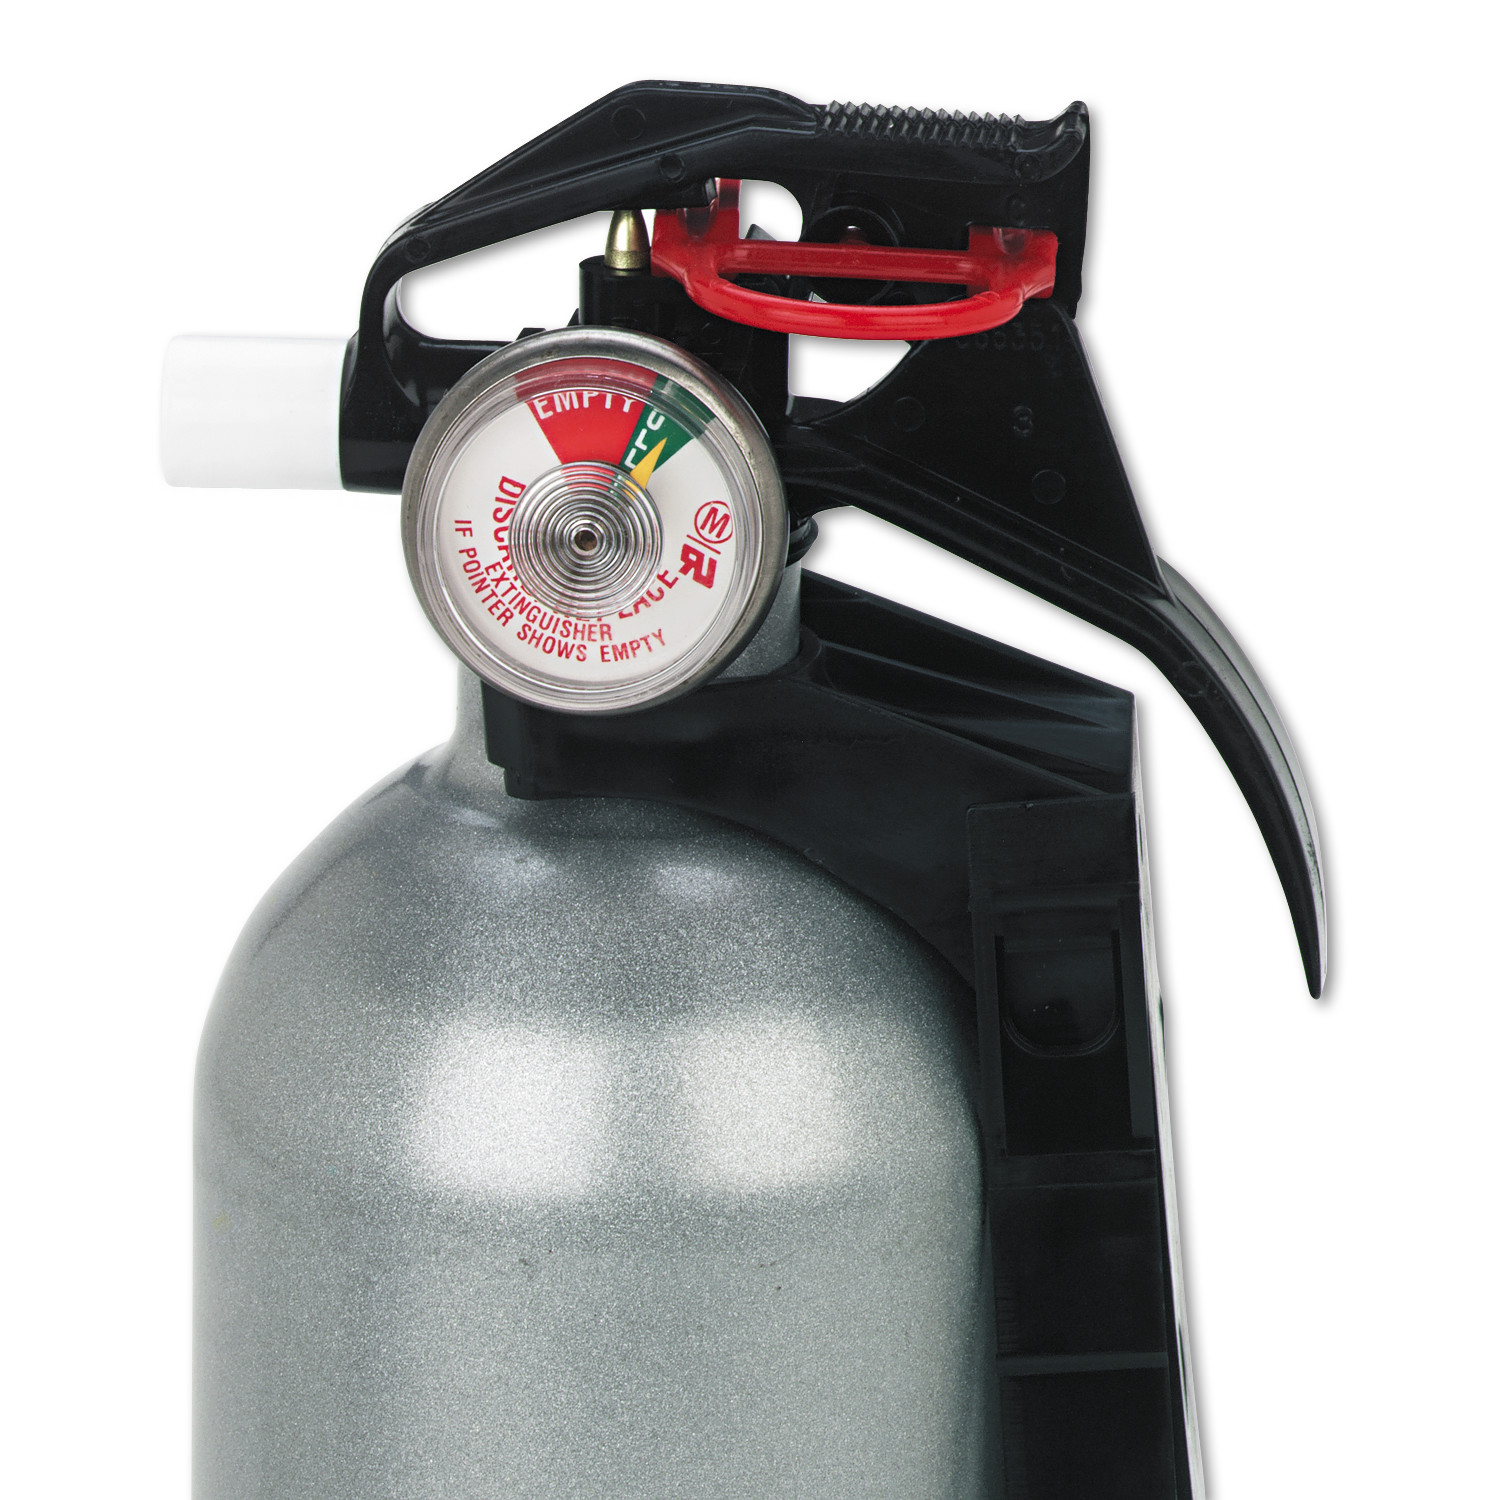 Kidde Auto Fire Extinguisher - image 3 of 5